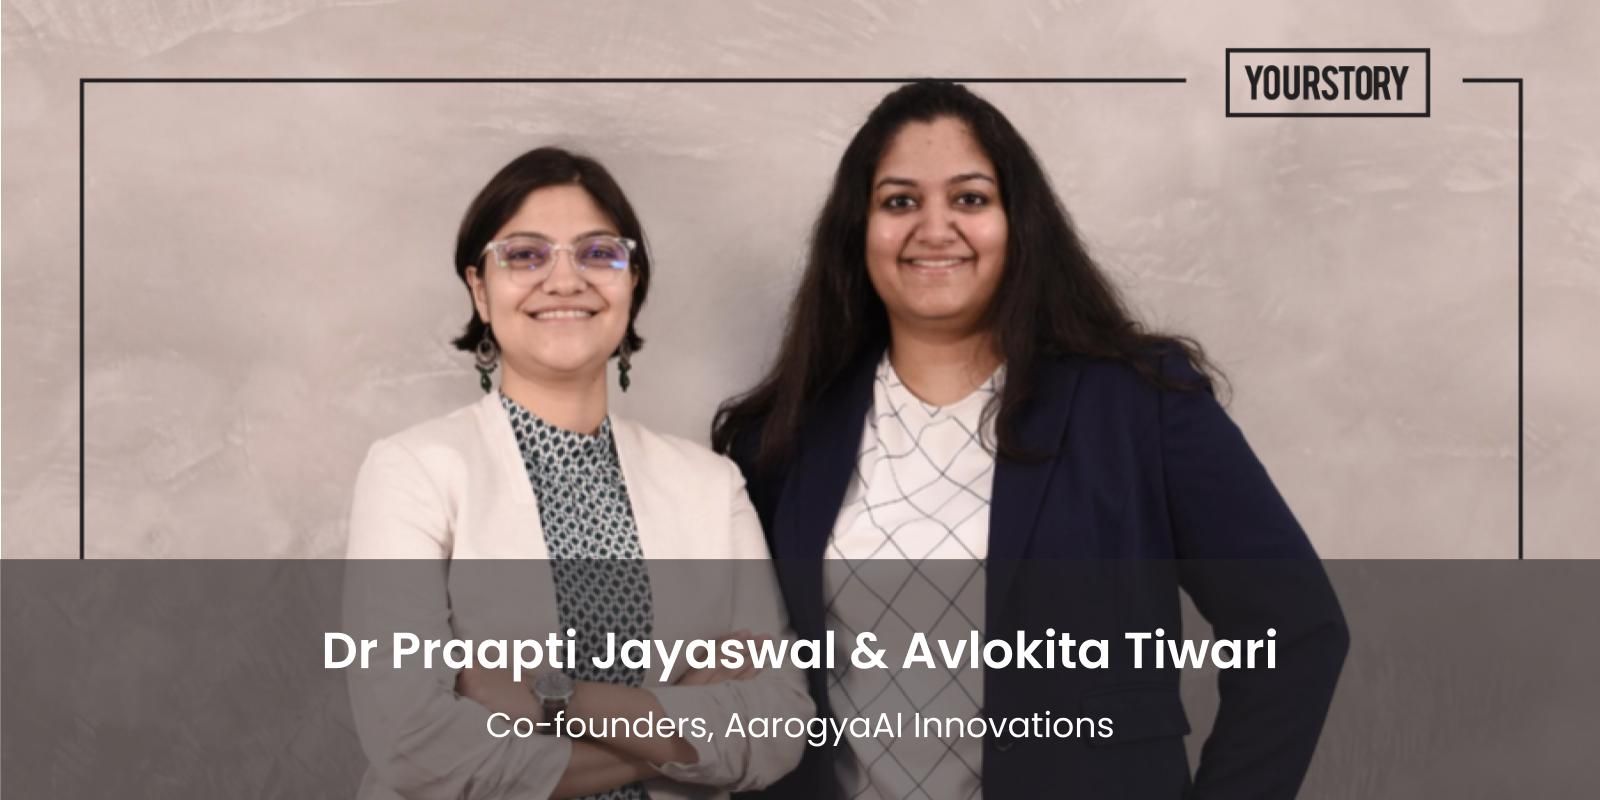 [Funding alert] Healthtech startup AarogyaAI raises $700K in seed round from Redstart Labs, Avaana Capital